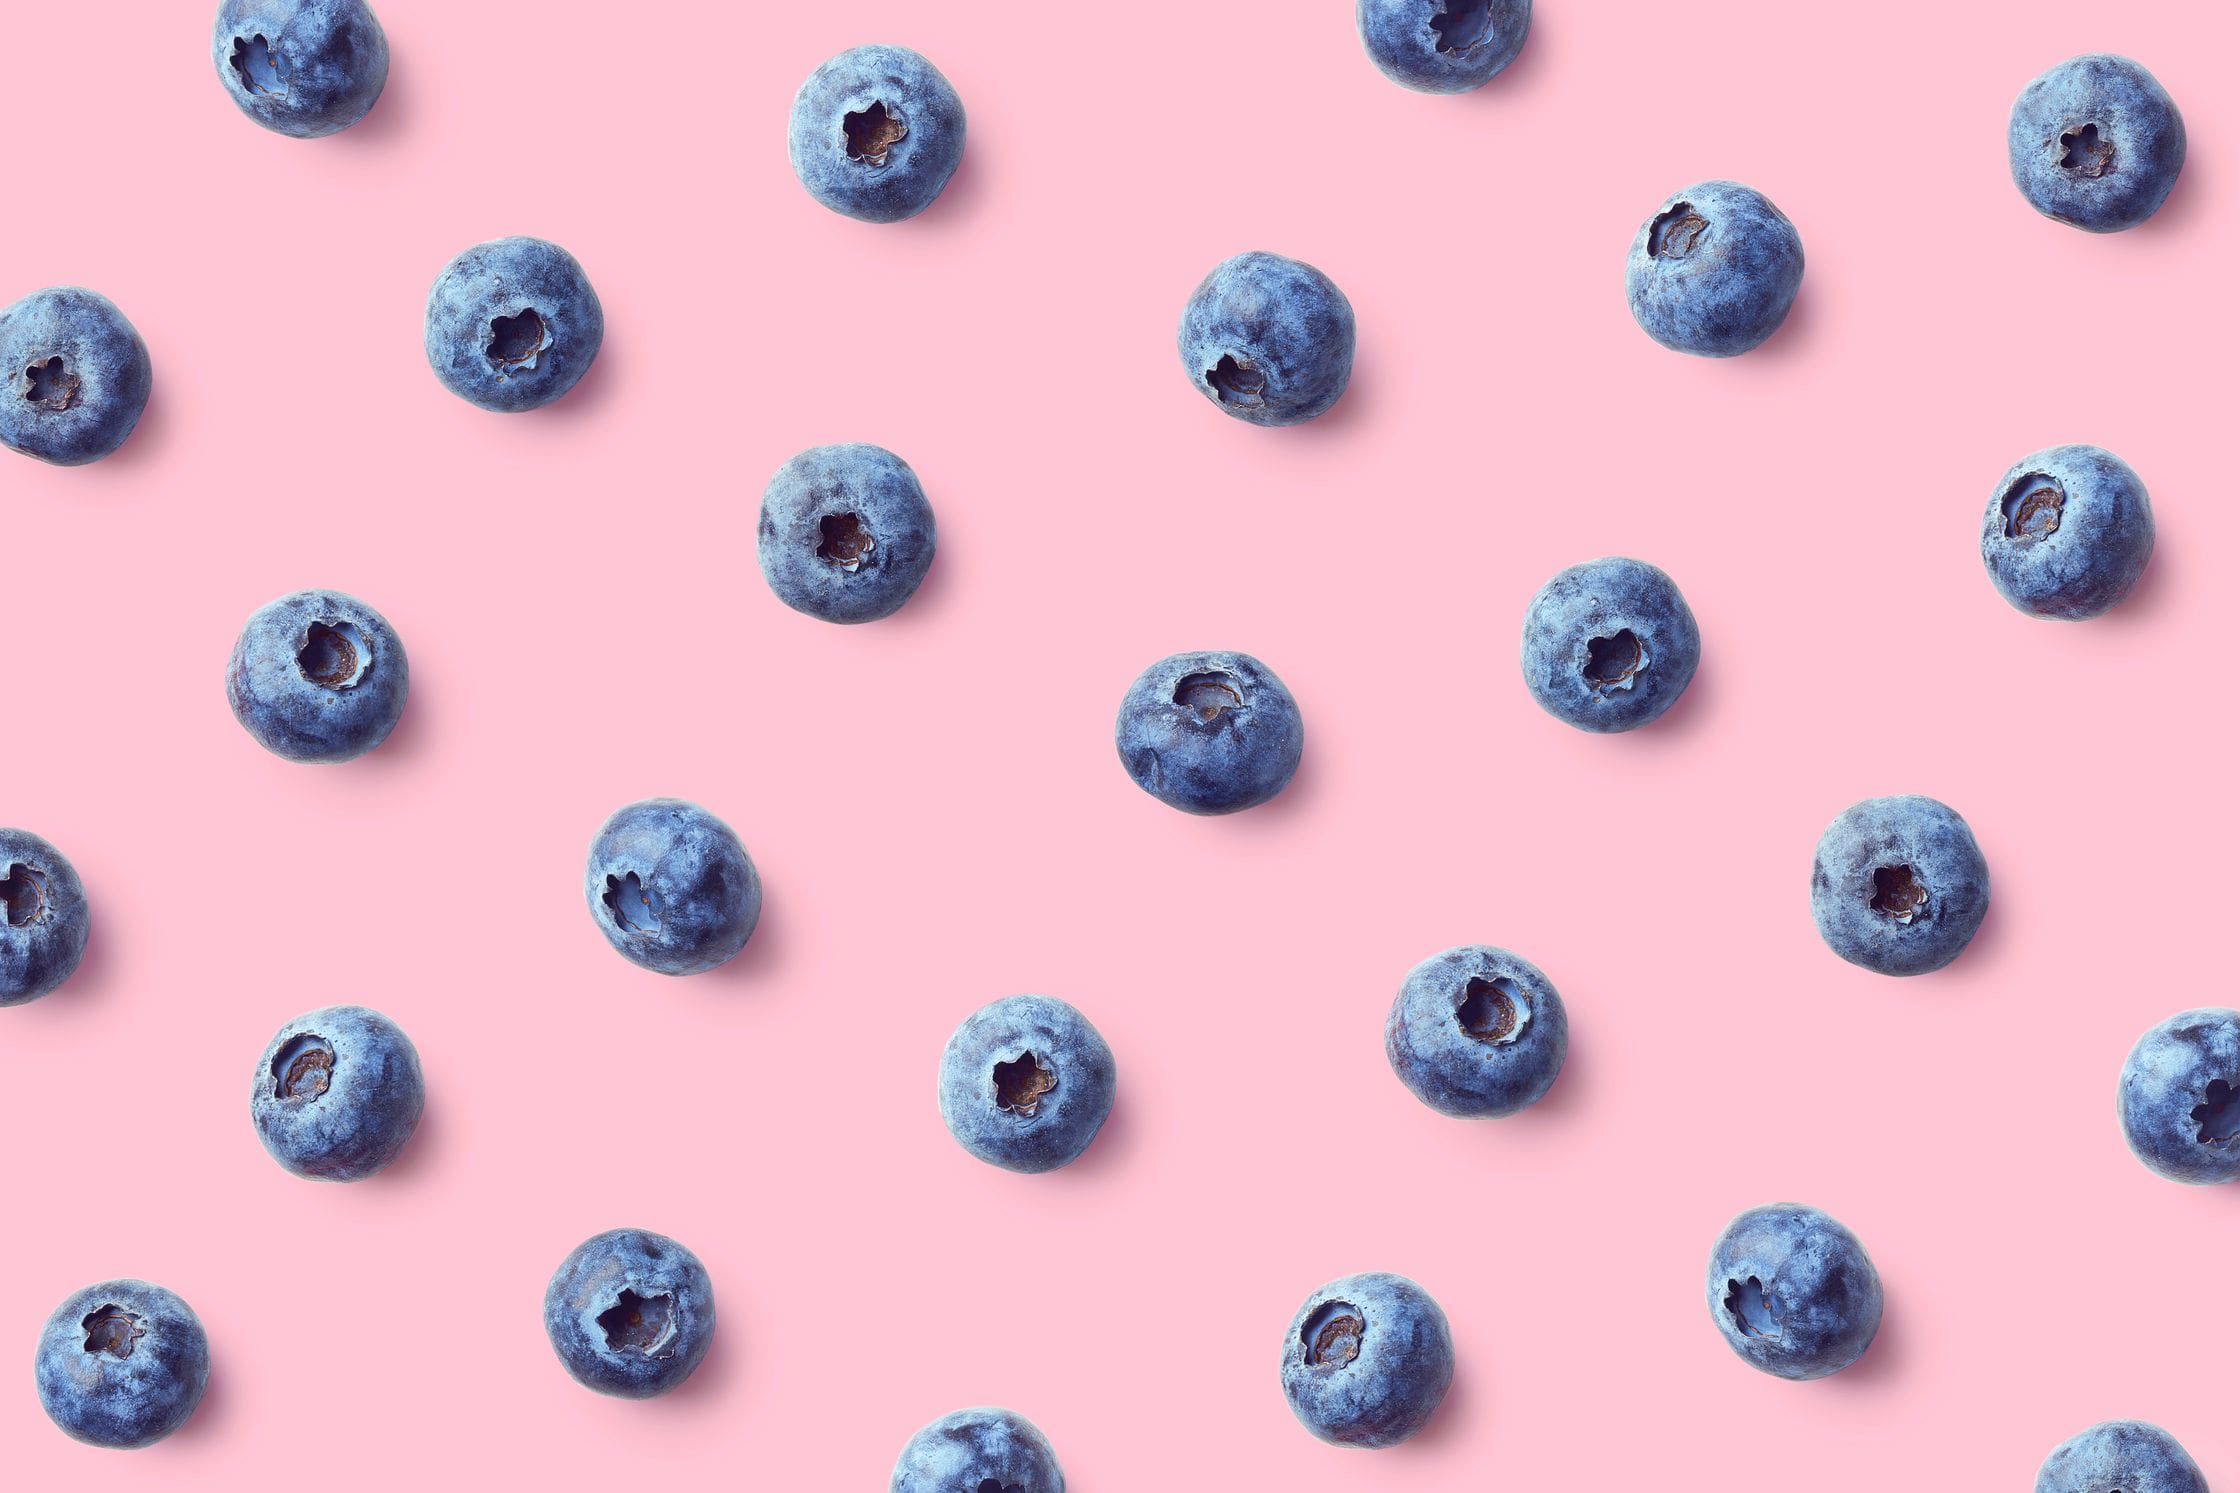 Eating blueberries to lower blood pressure